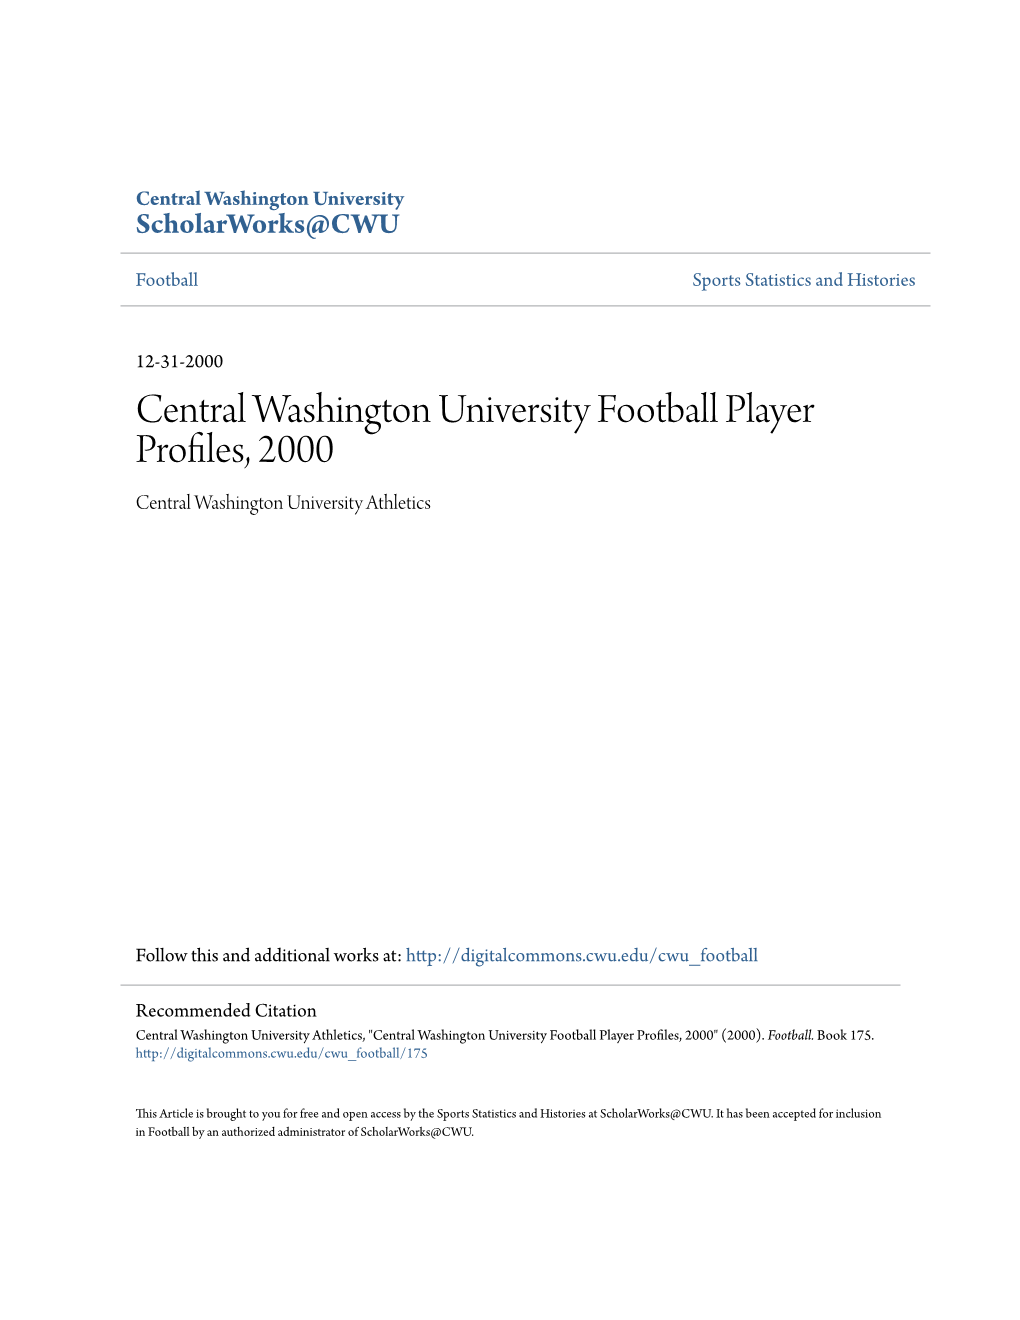 Central Washington University Football Player Profiles, 2000 Central Washington University Athletics